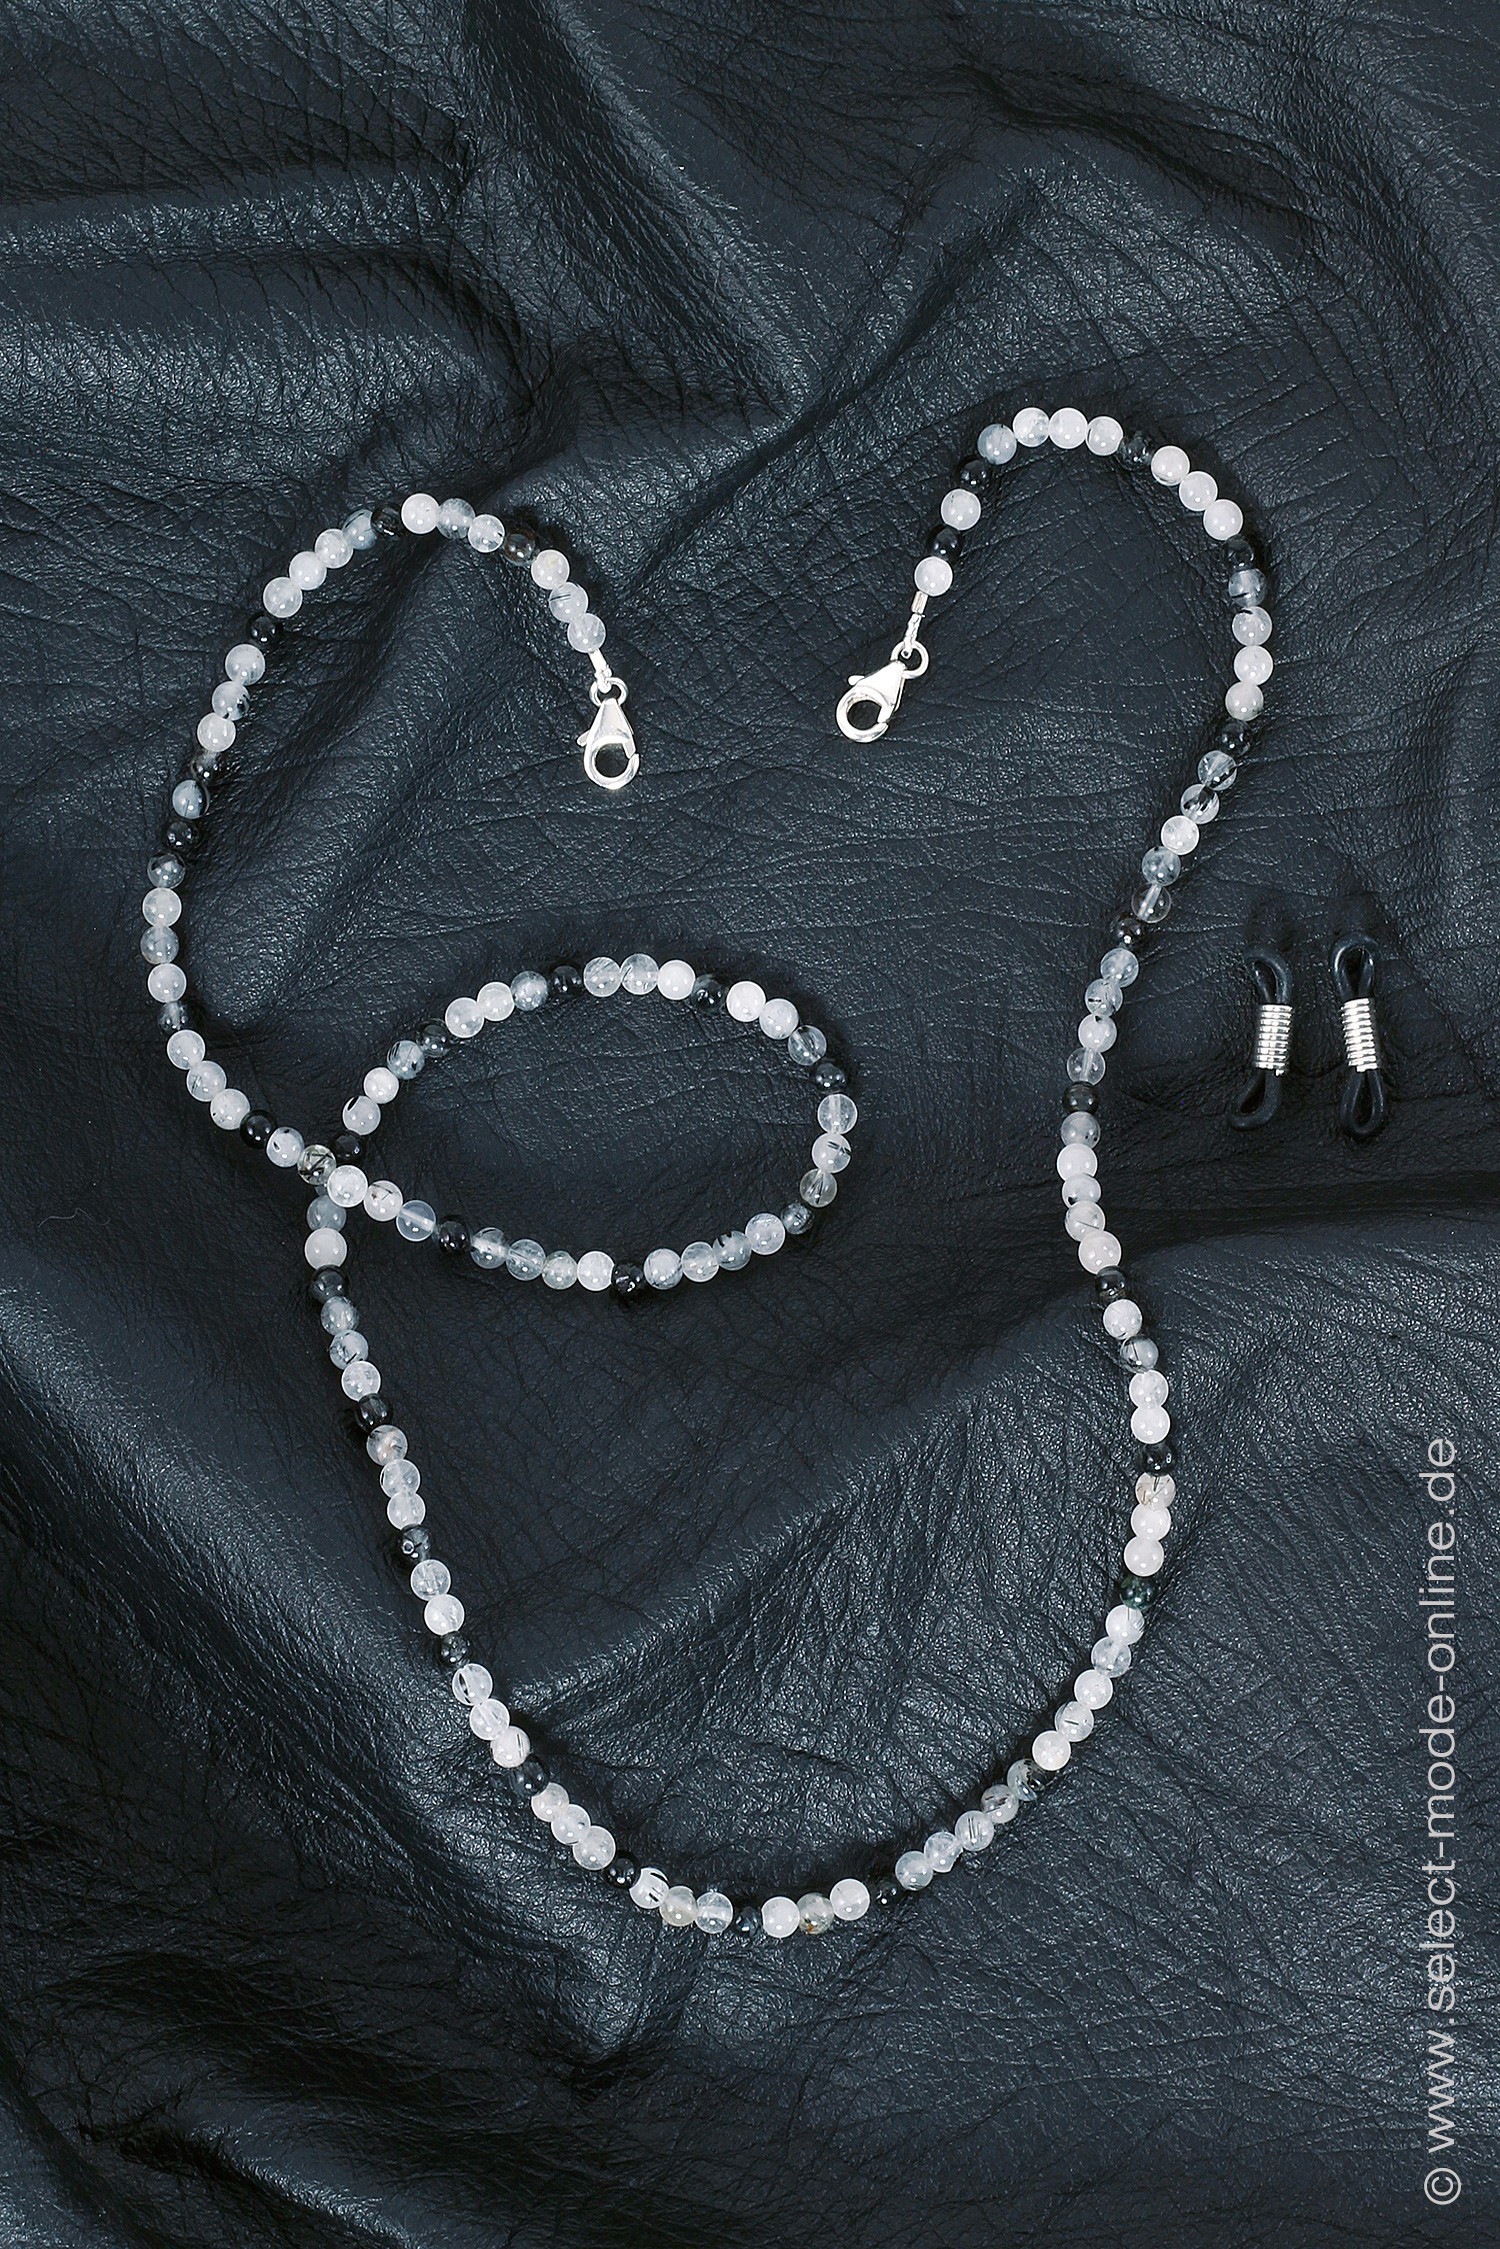 Glasses chain & Necklace - tourmaline quartz